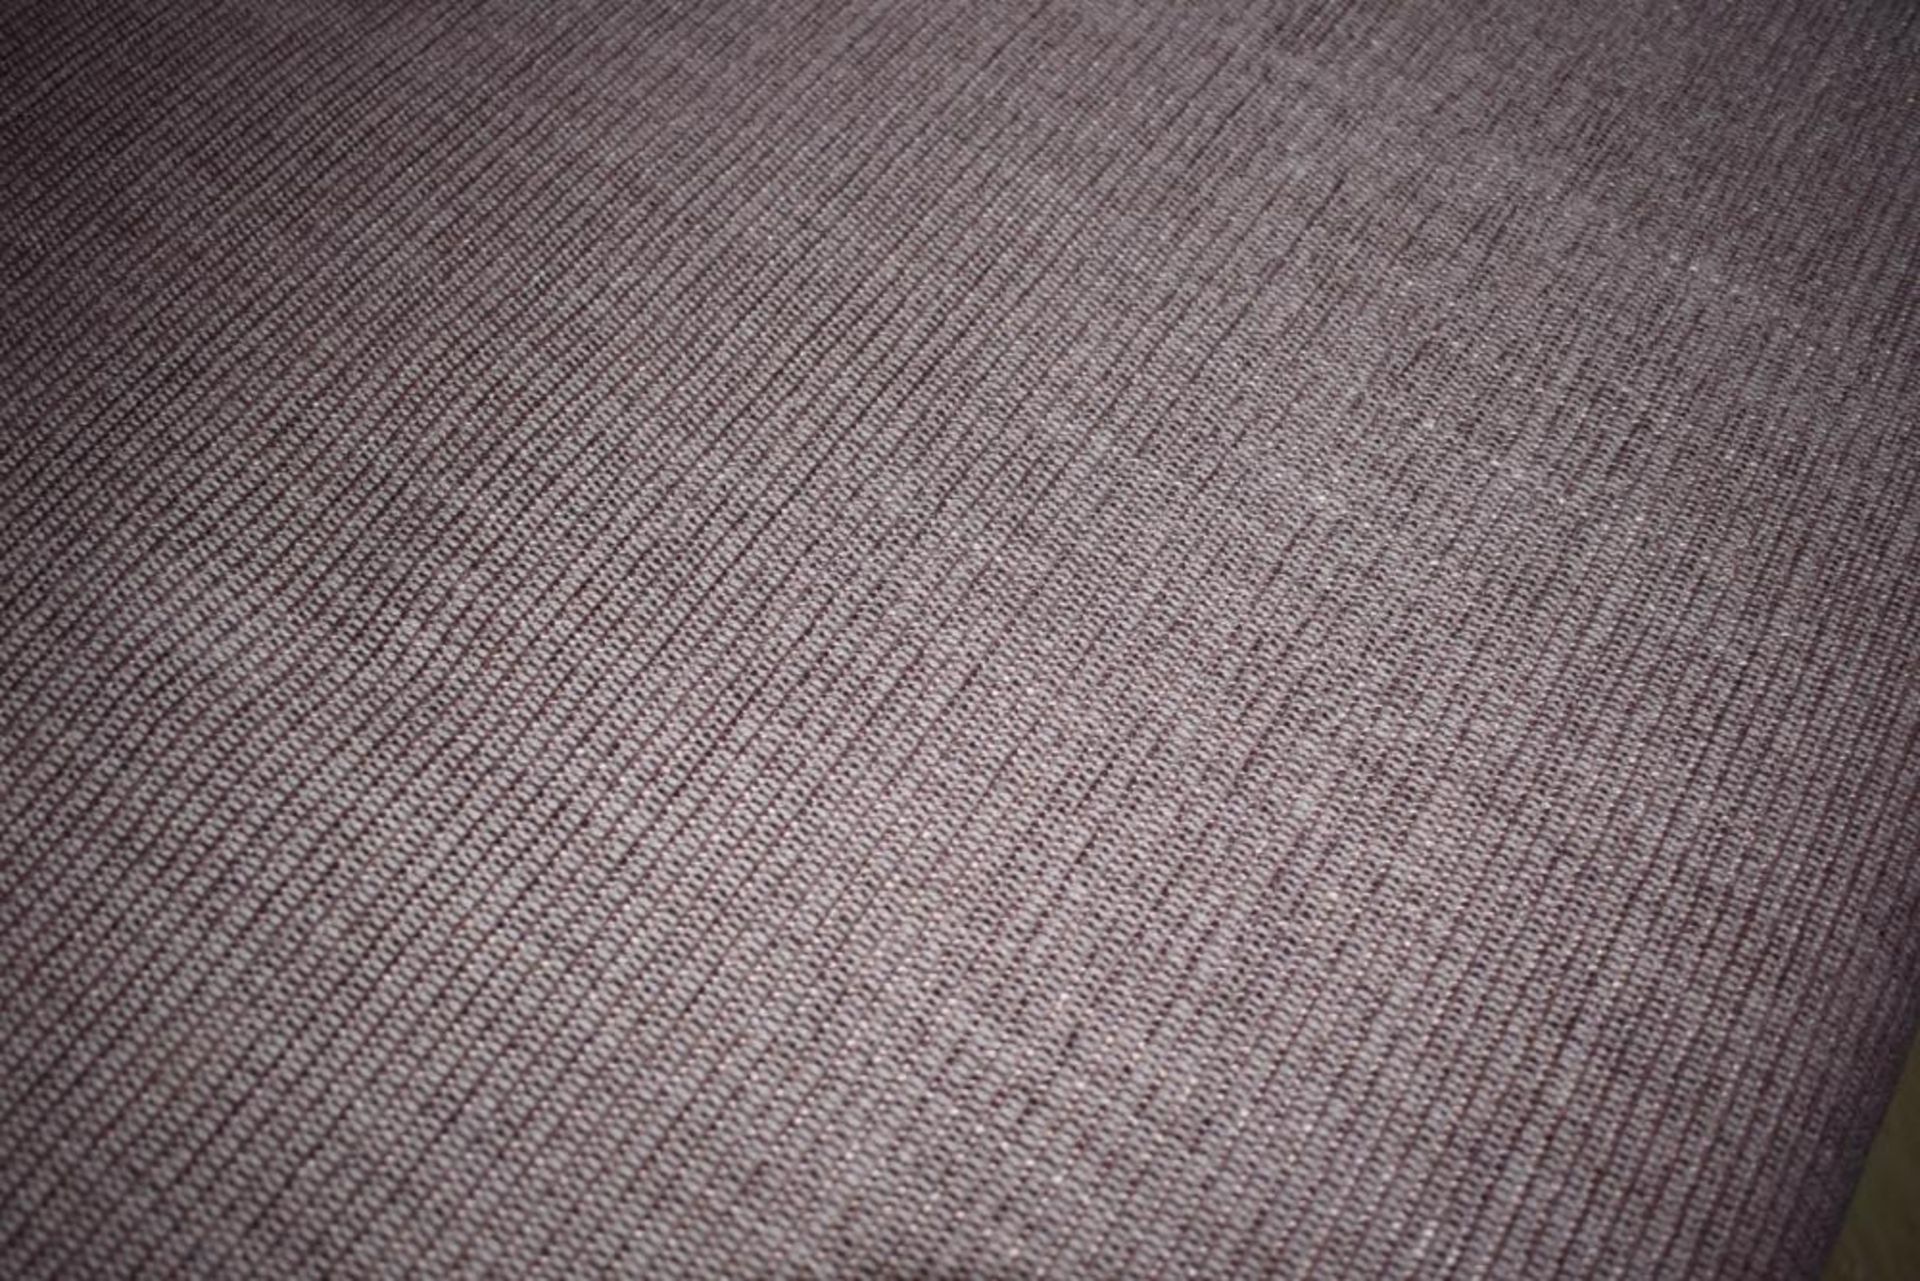 1 x SWAN Italia Corner Sofa and Ottoman finished in Light Purple - CL469 - Location: Prestwich M25 - - Image 5 of 14